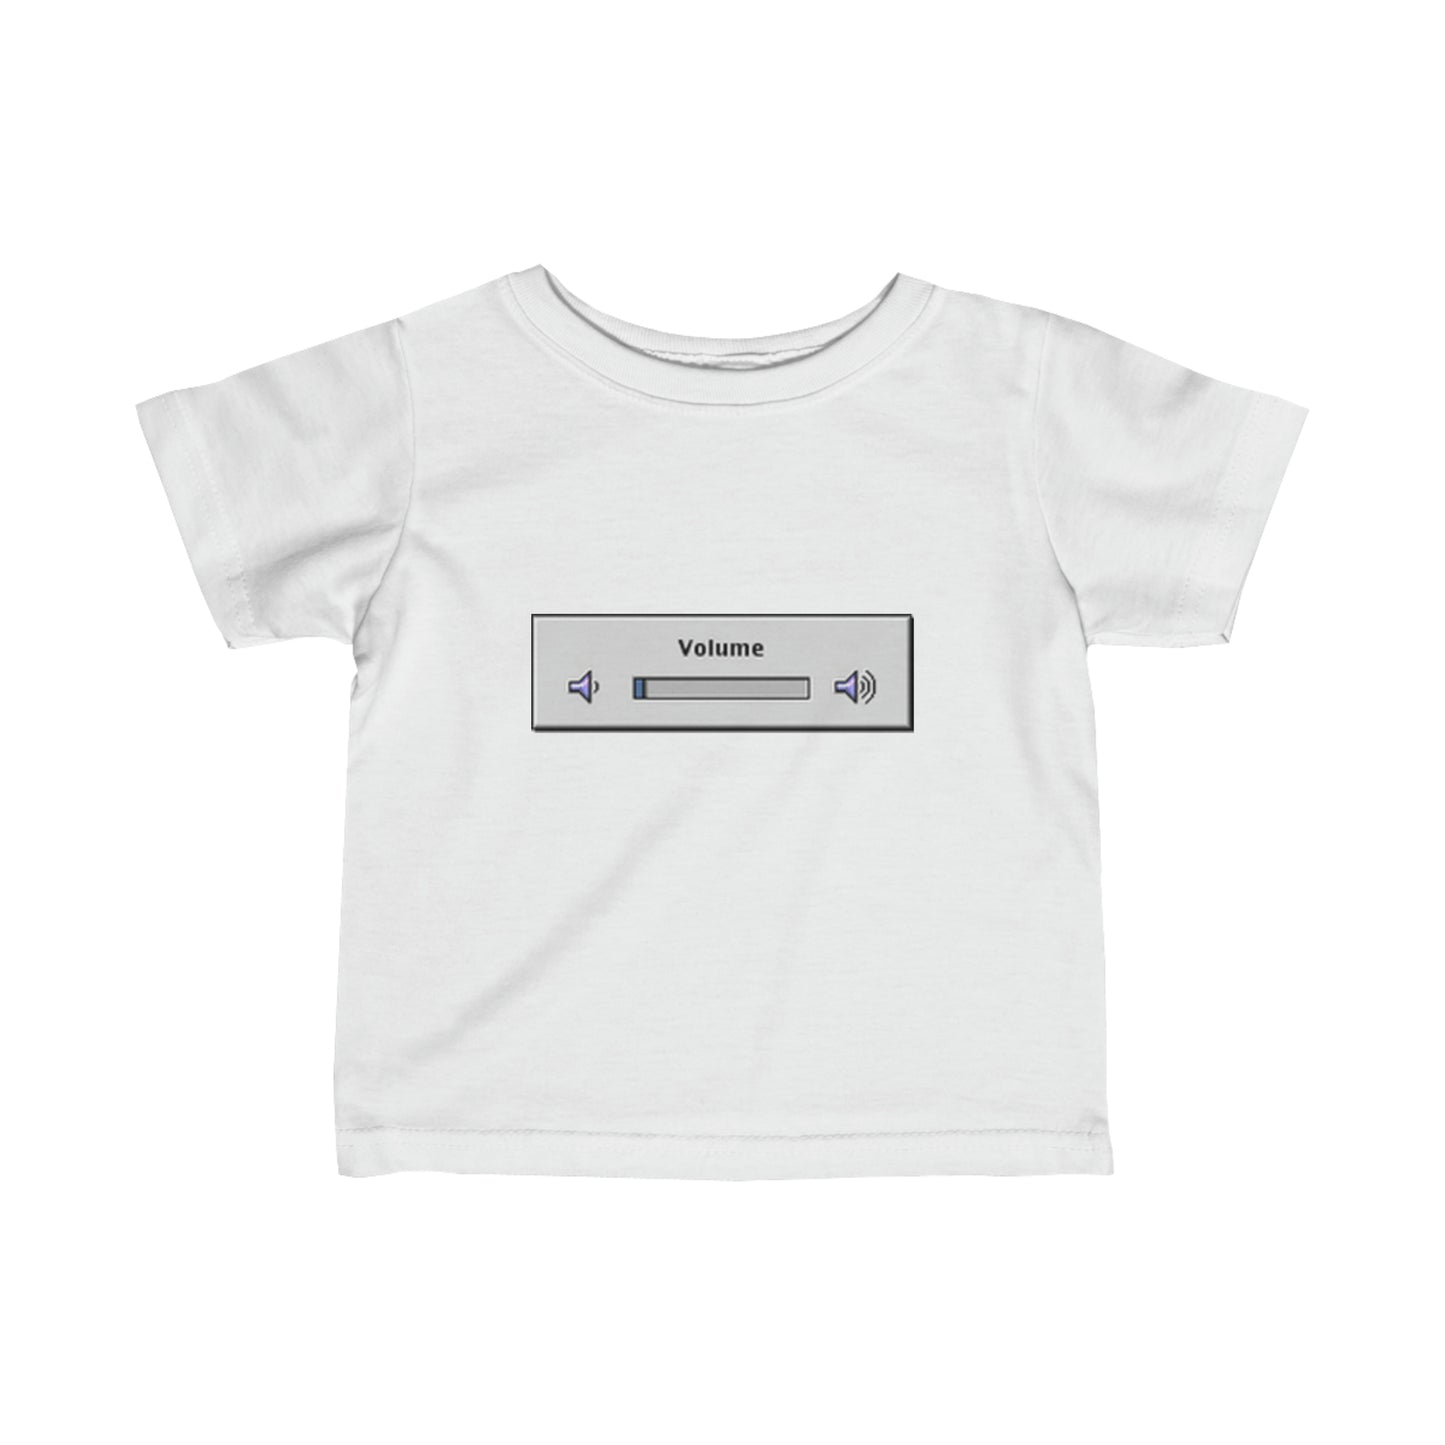 Volume Infant T-Shirt